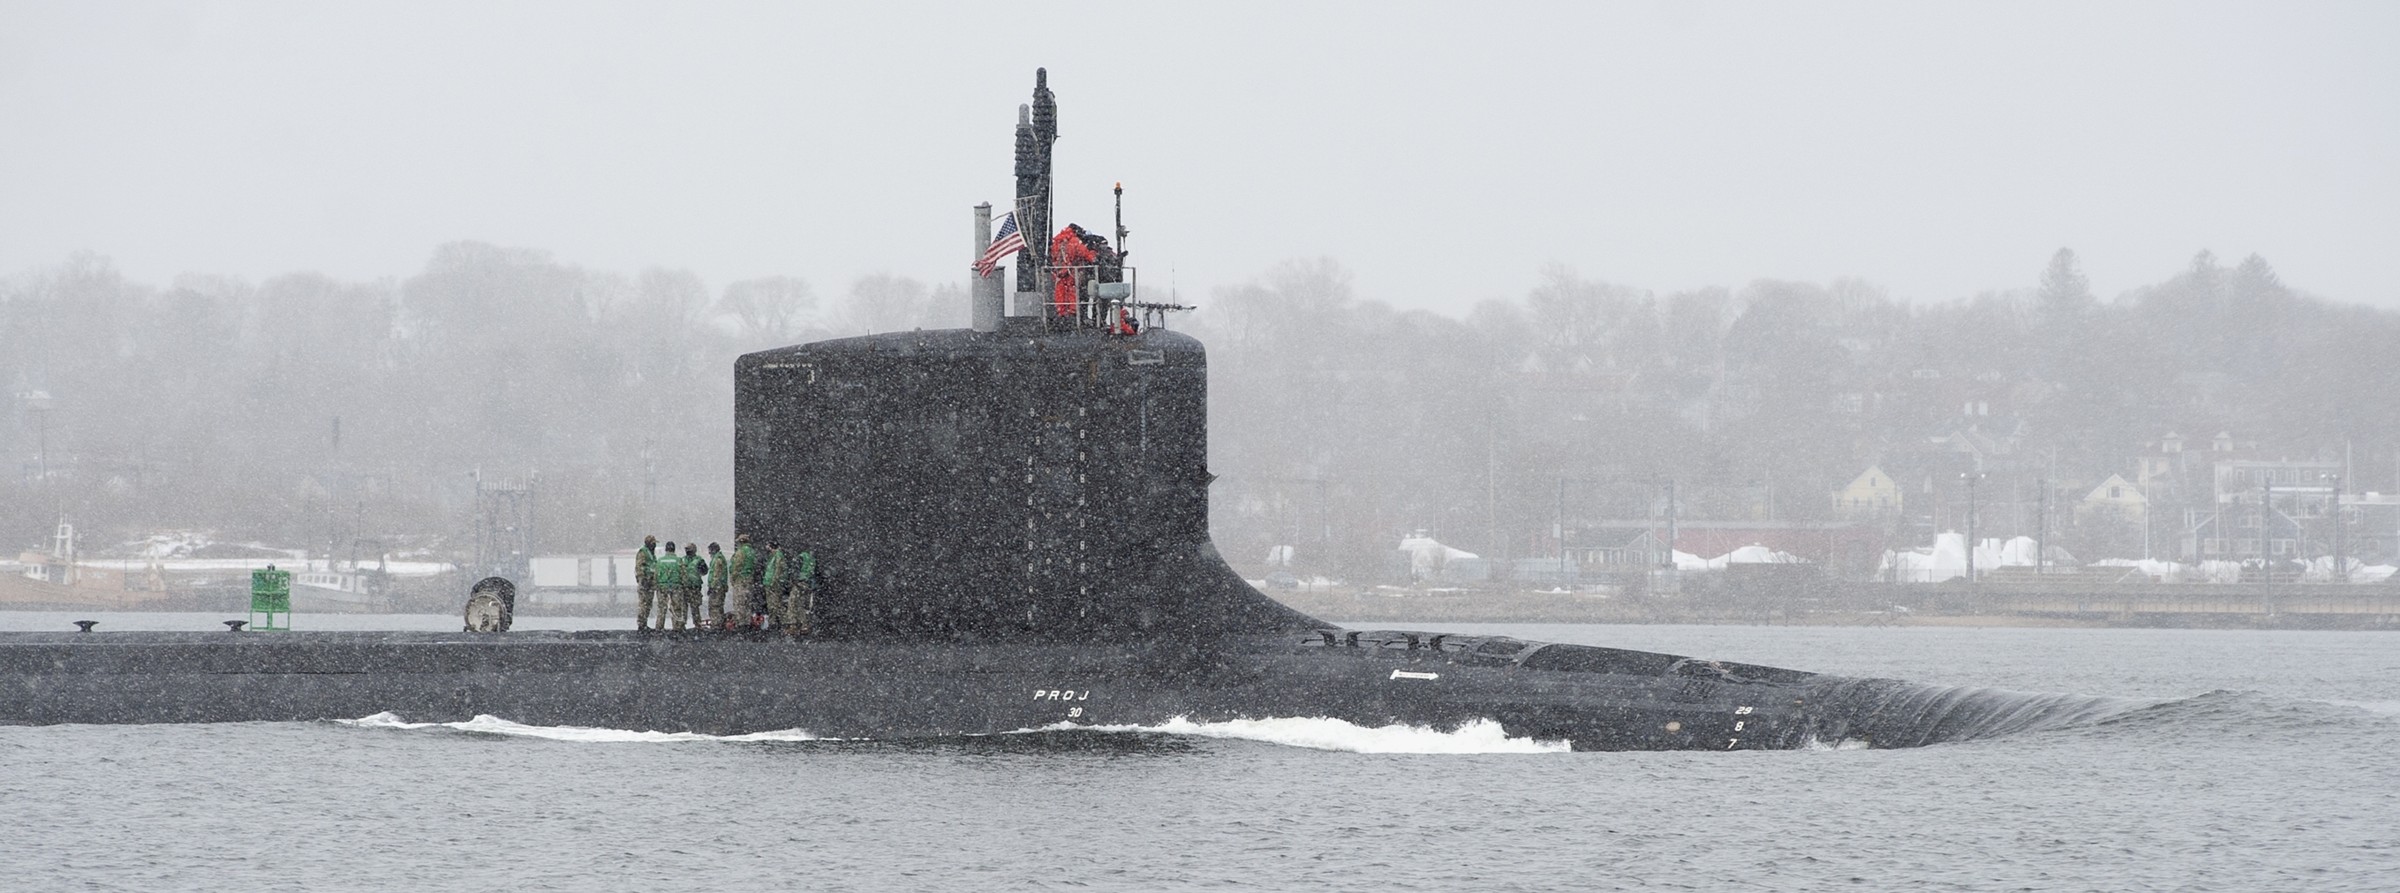 ssn-792 uss vermont virginia class attack submarine us navy 12 returning new london subase groton